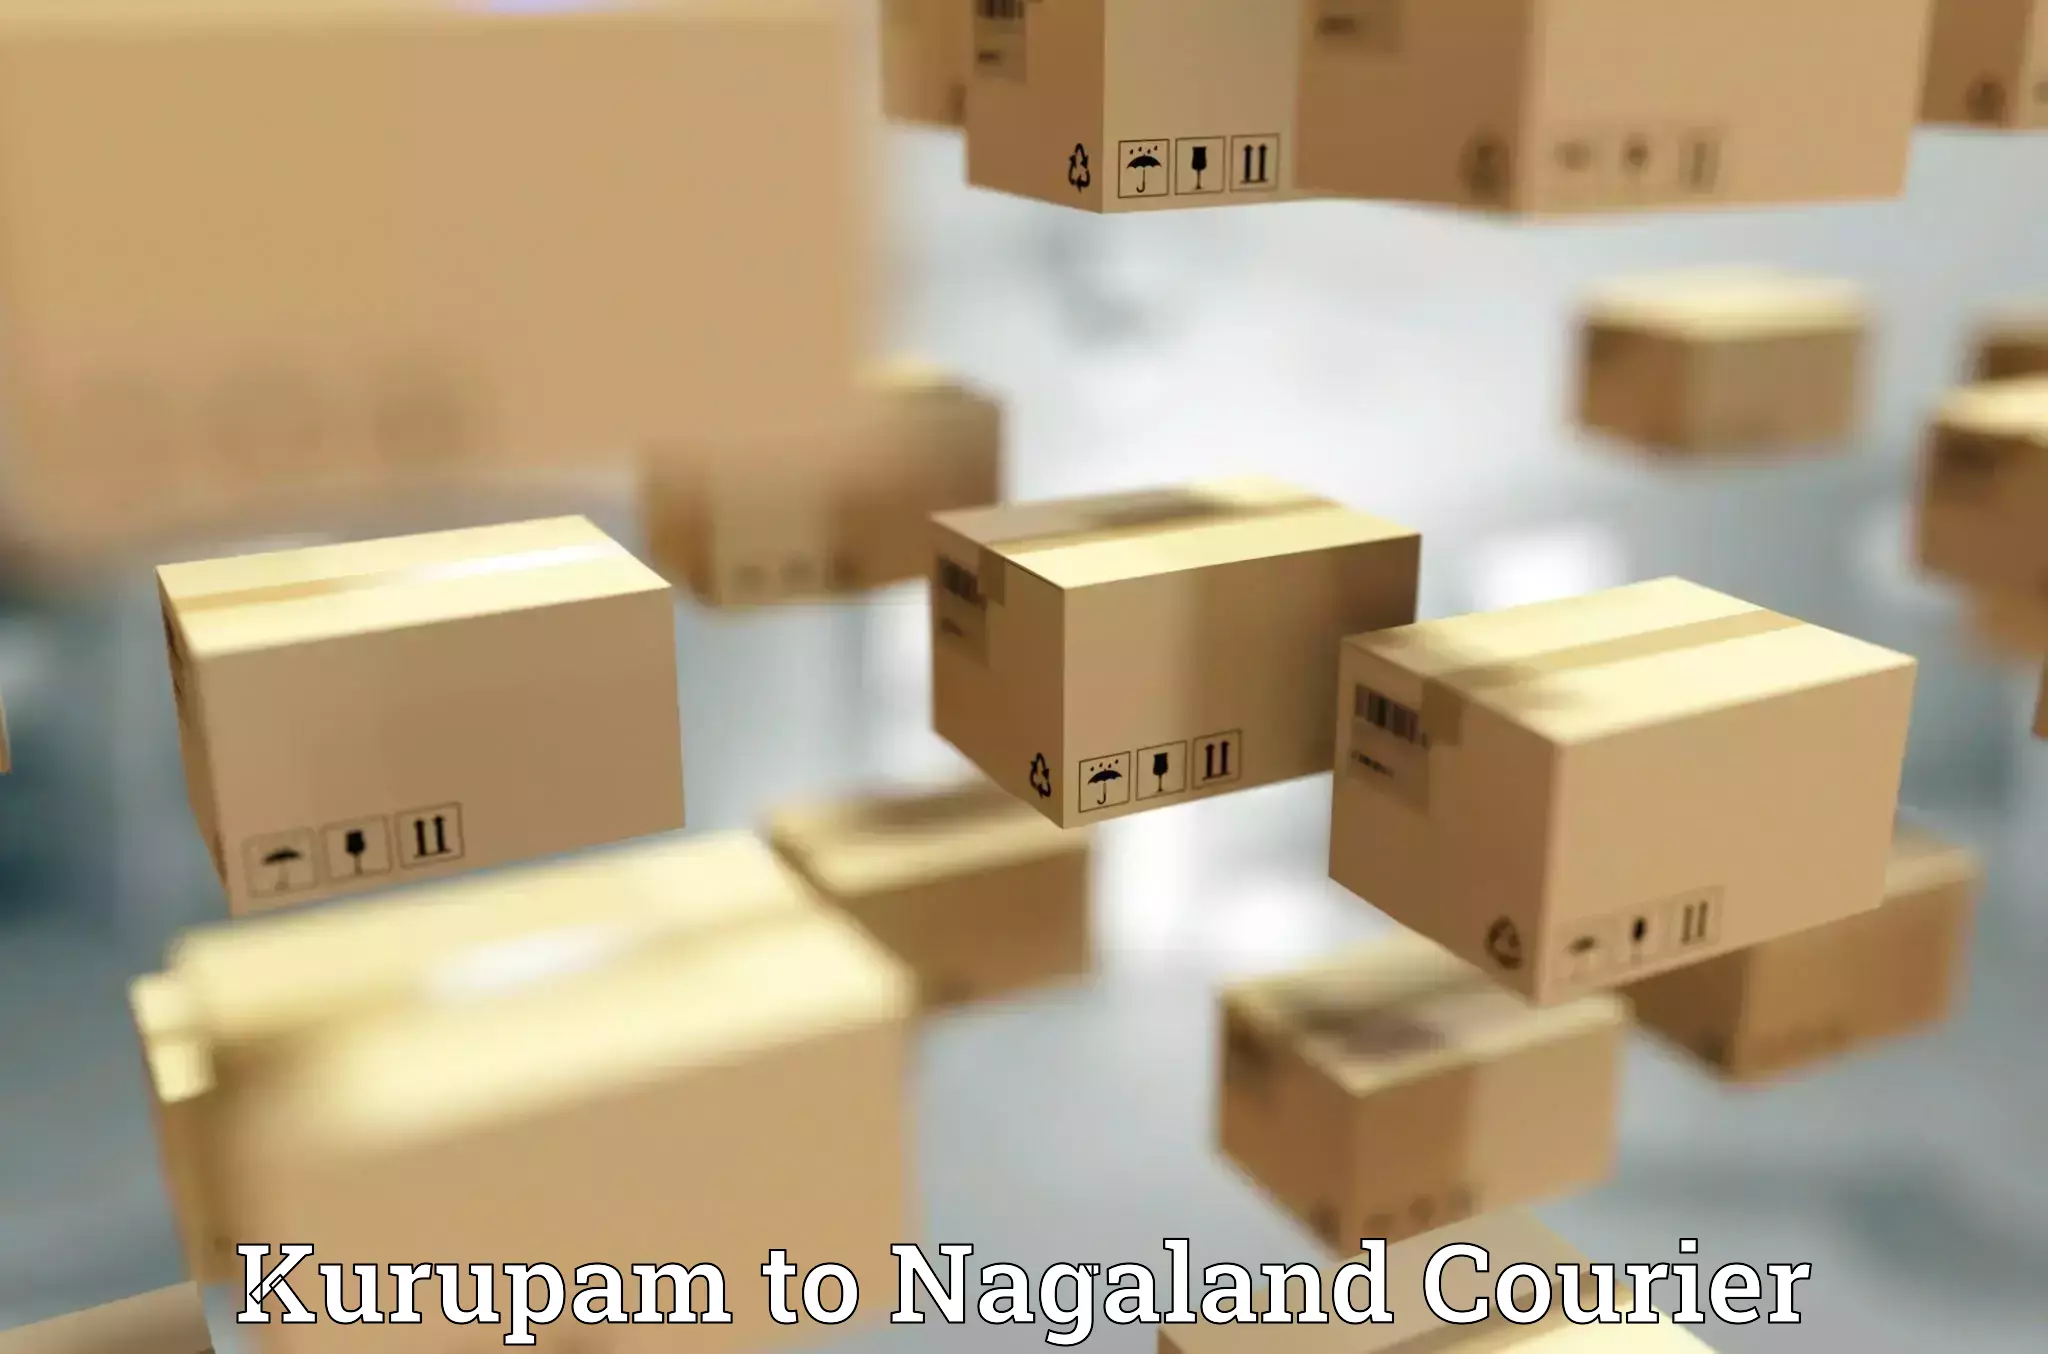 Seamless shipping experience in Kurupam to Nagaland